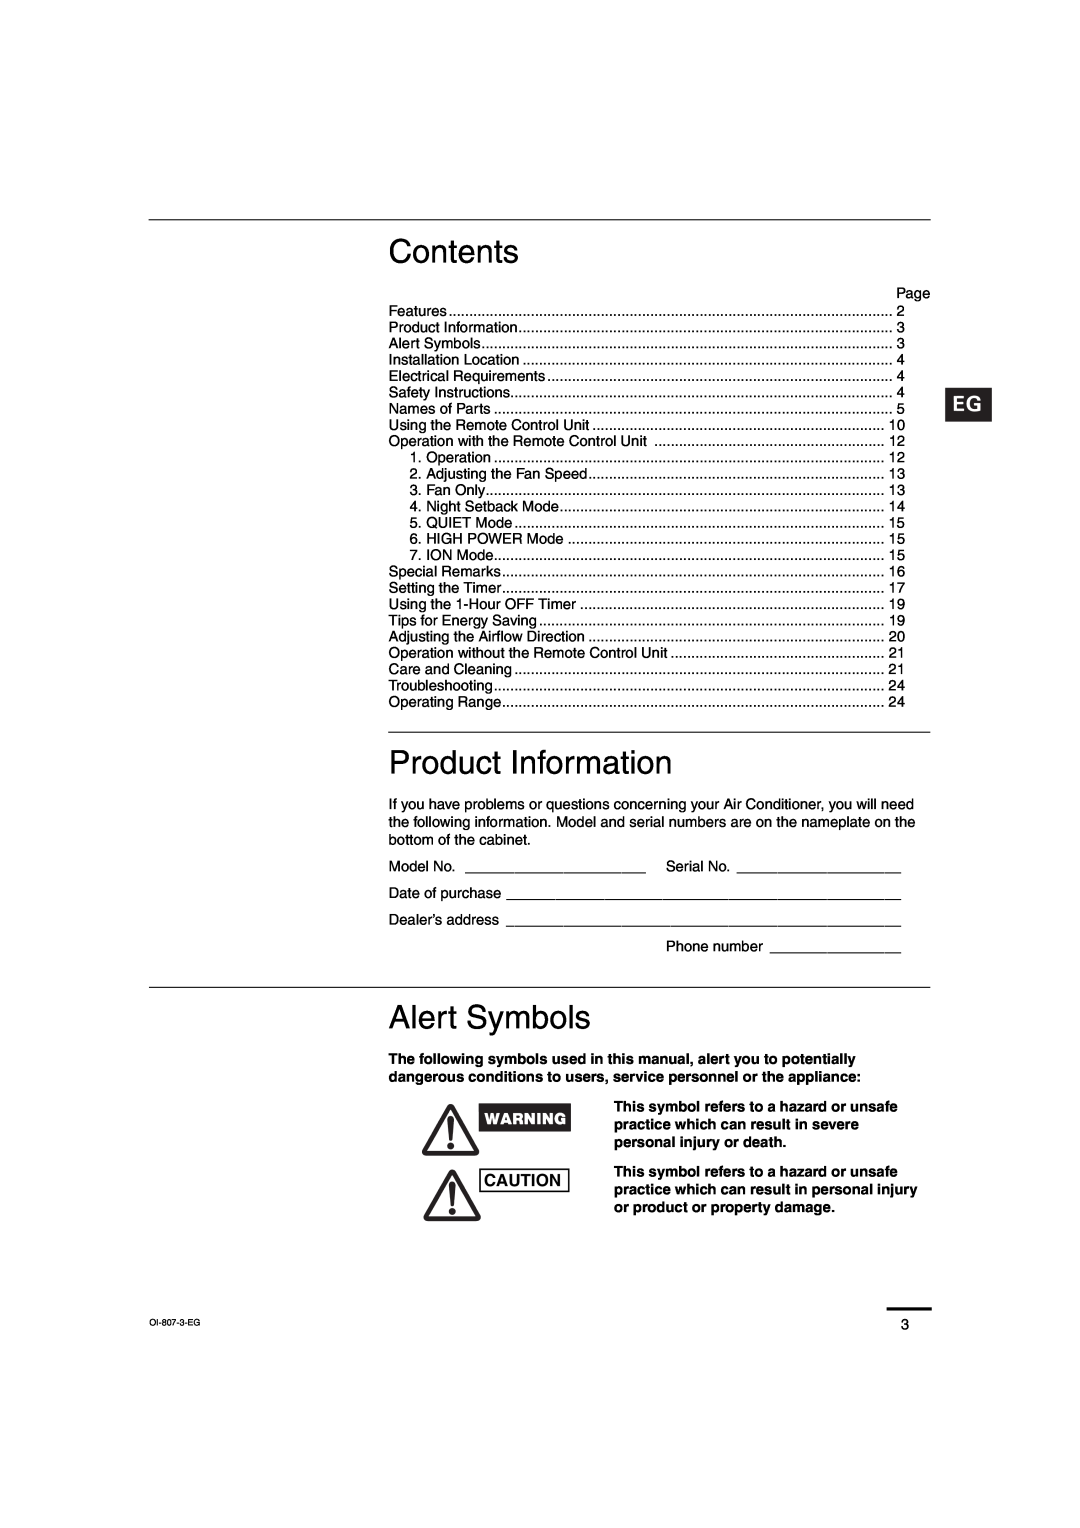 Sanyo KMS1872, KMS2472 service manual Contents, Product Information, Alert Symbols 